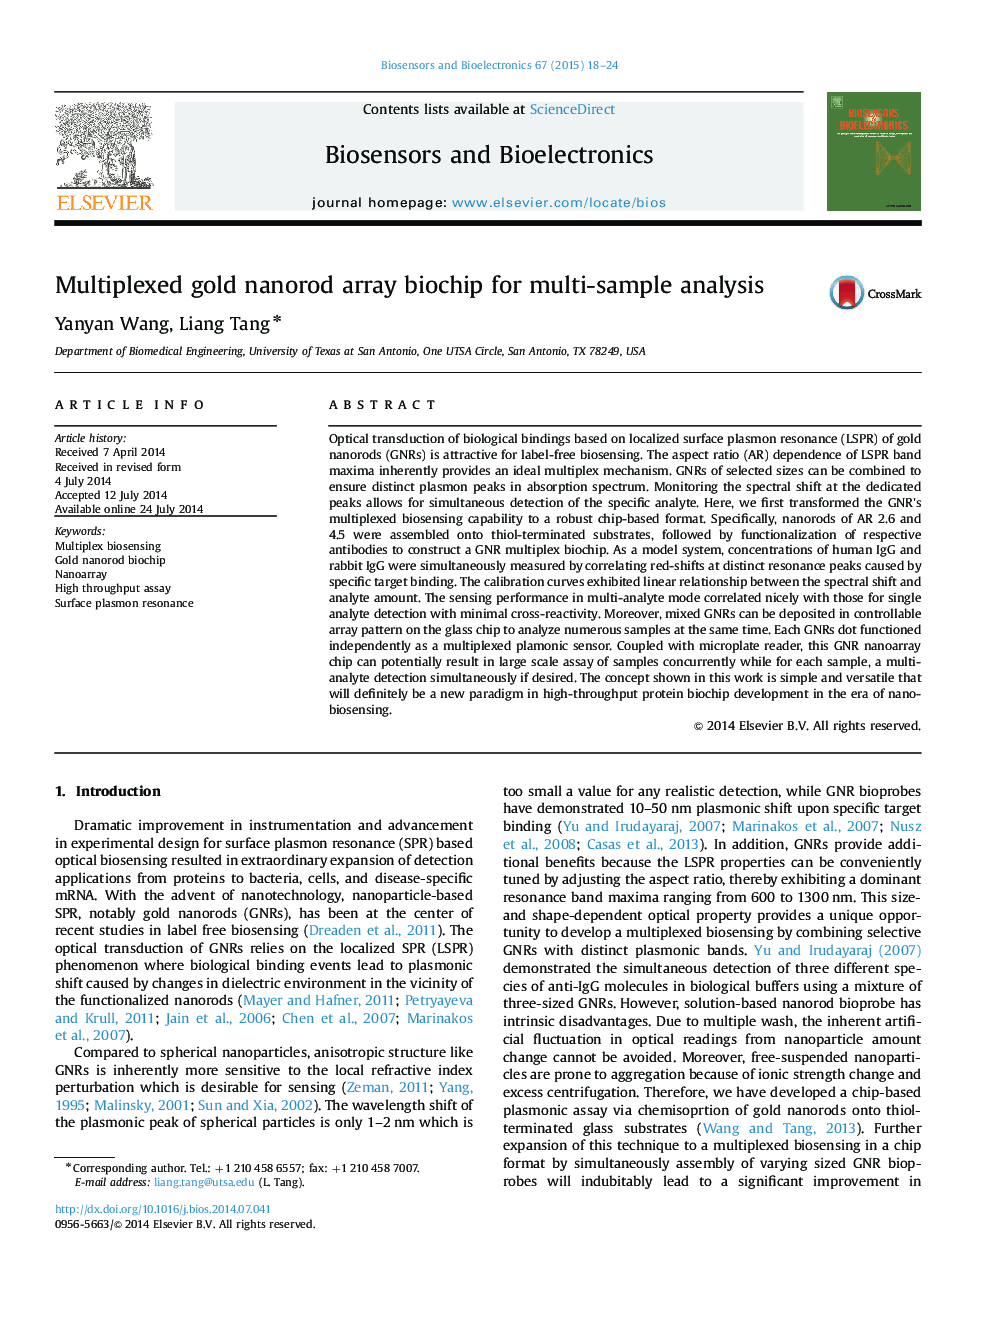 Multiplexed gold nanorod array biochip for multi-sample analysis